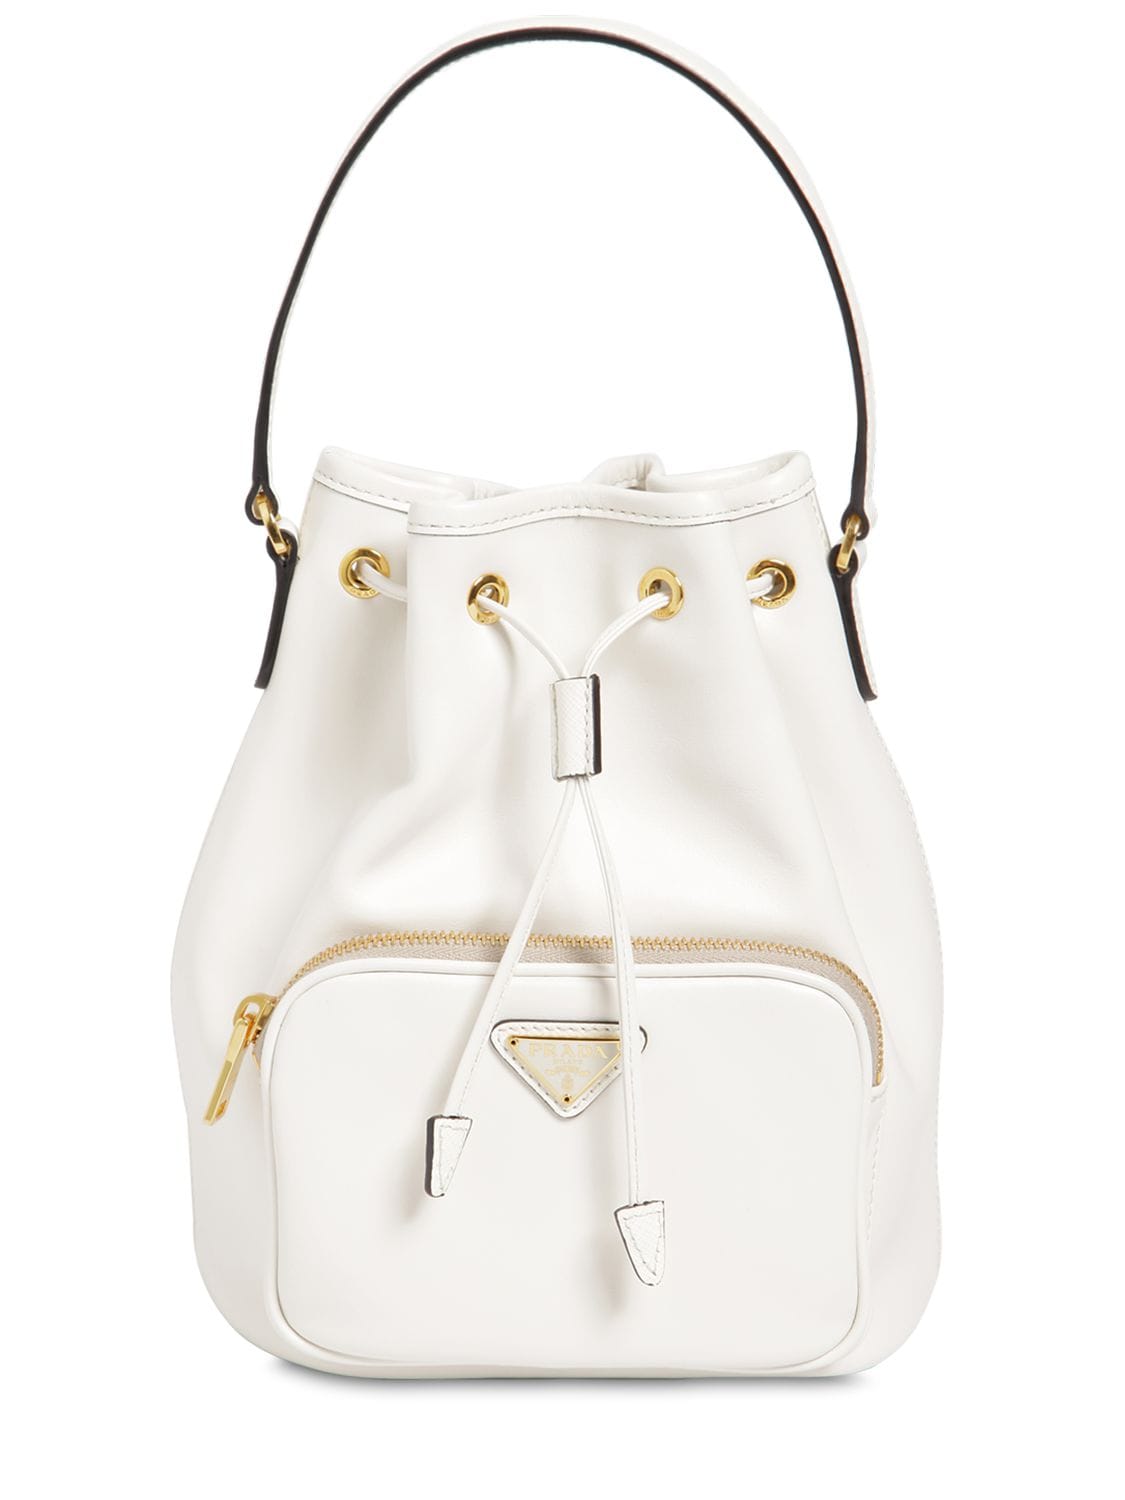 Prada Saffiano & City Leather Bucket Bag In White